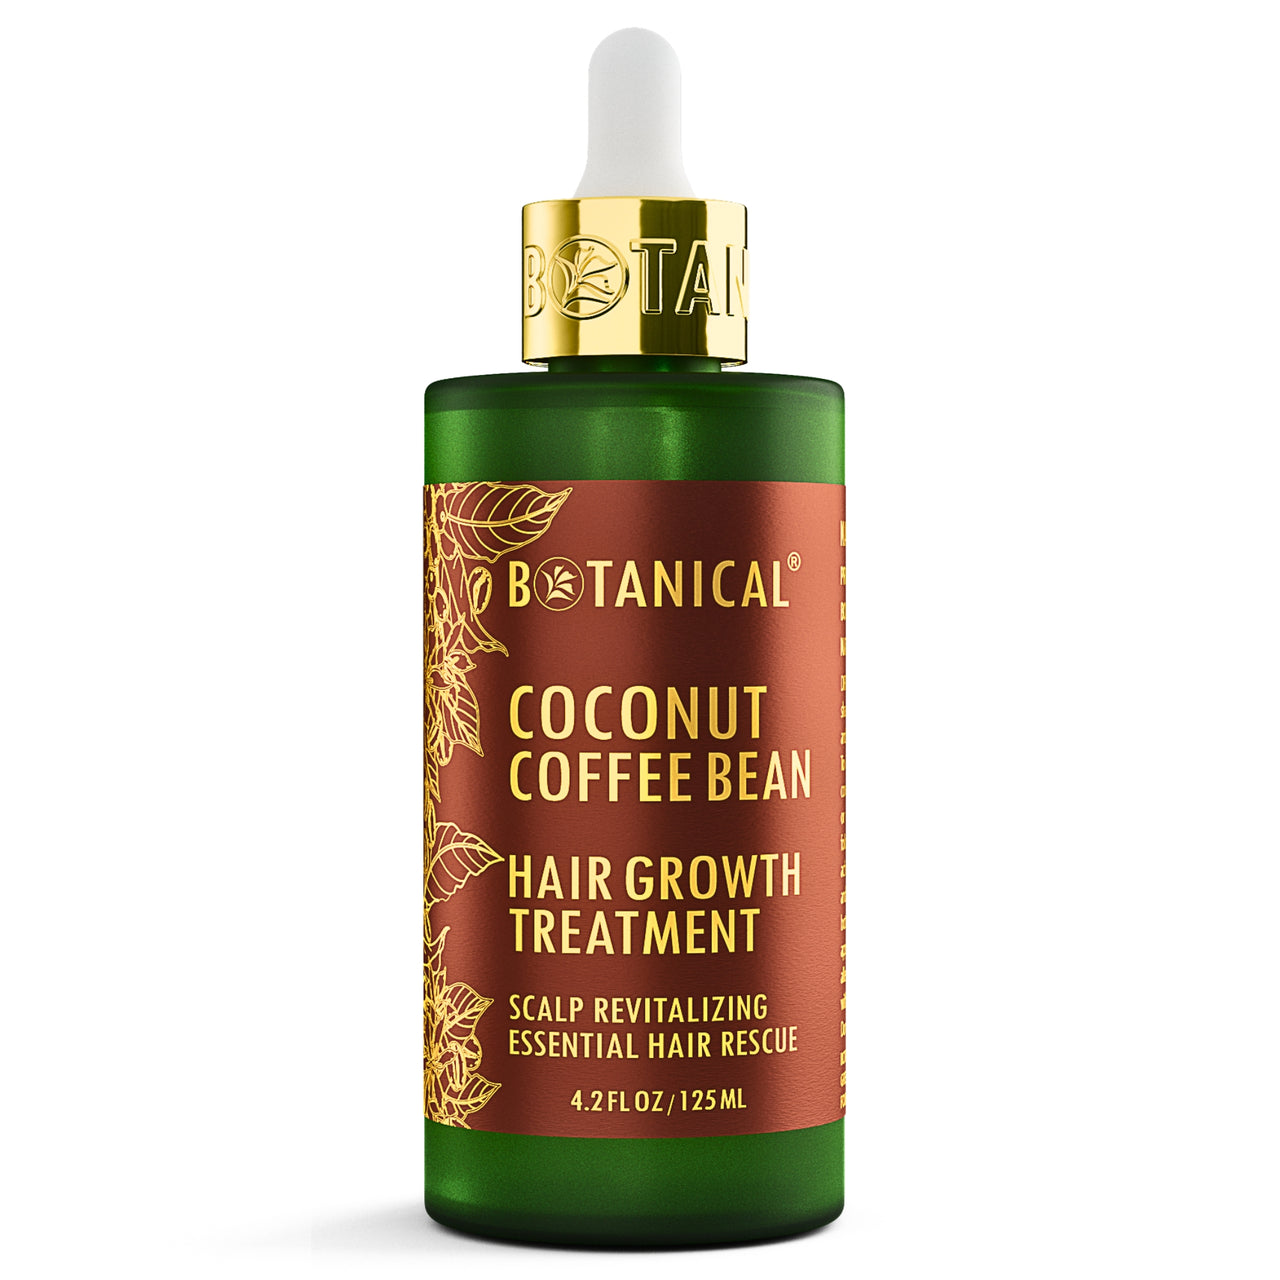 Coffee Bean & Coconut Caffeine Hair Growth Treatment Pre-Shampoo - Scalp Revitalizing - 4.2 Fl Oz